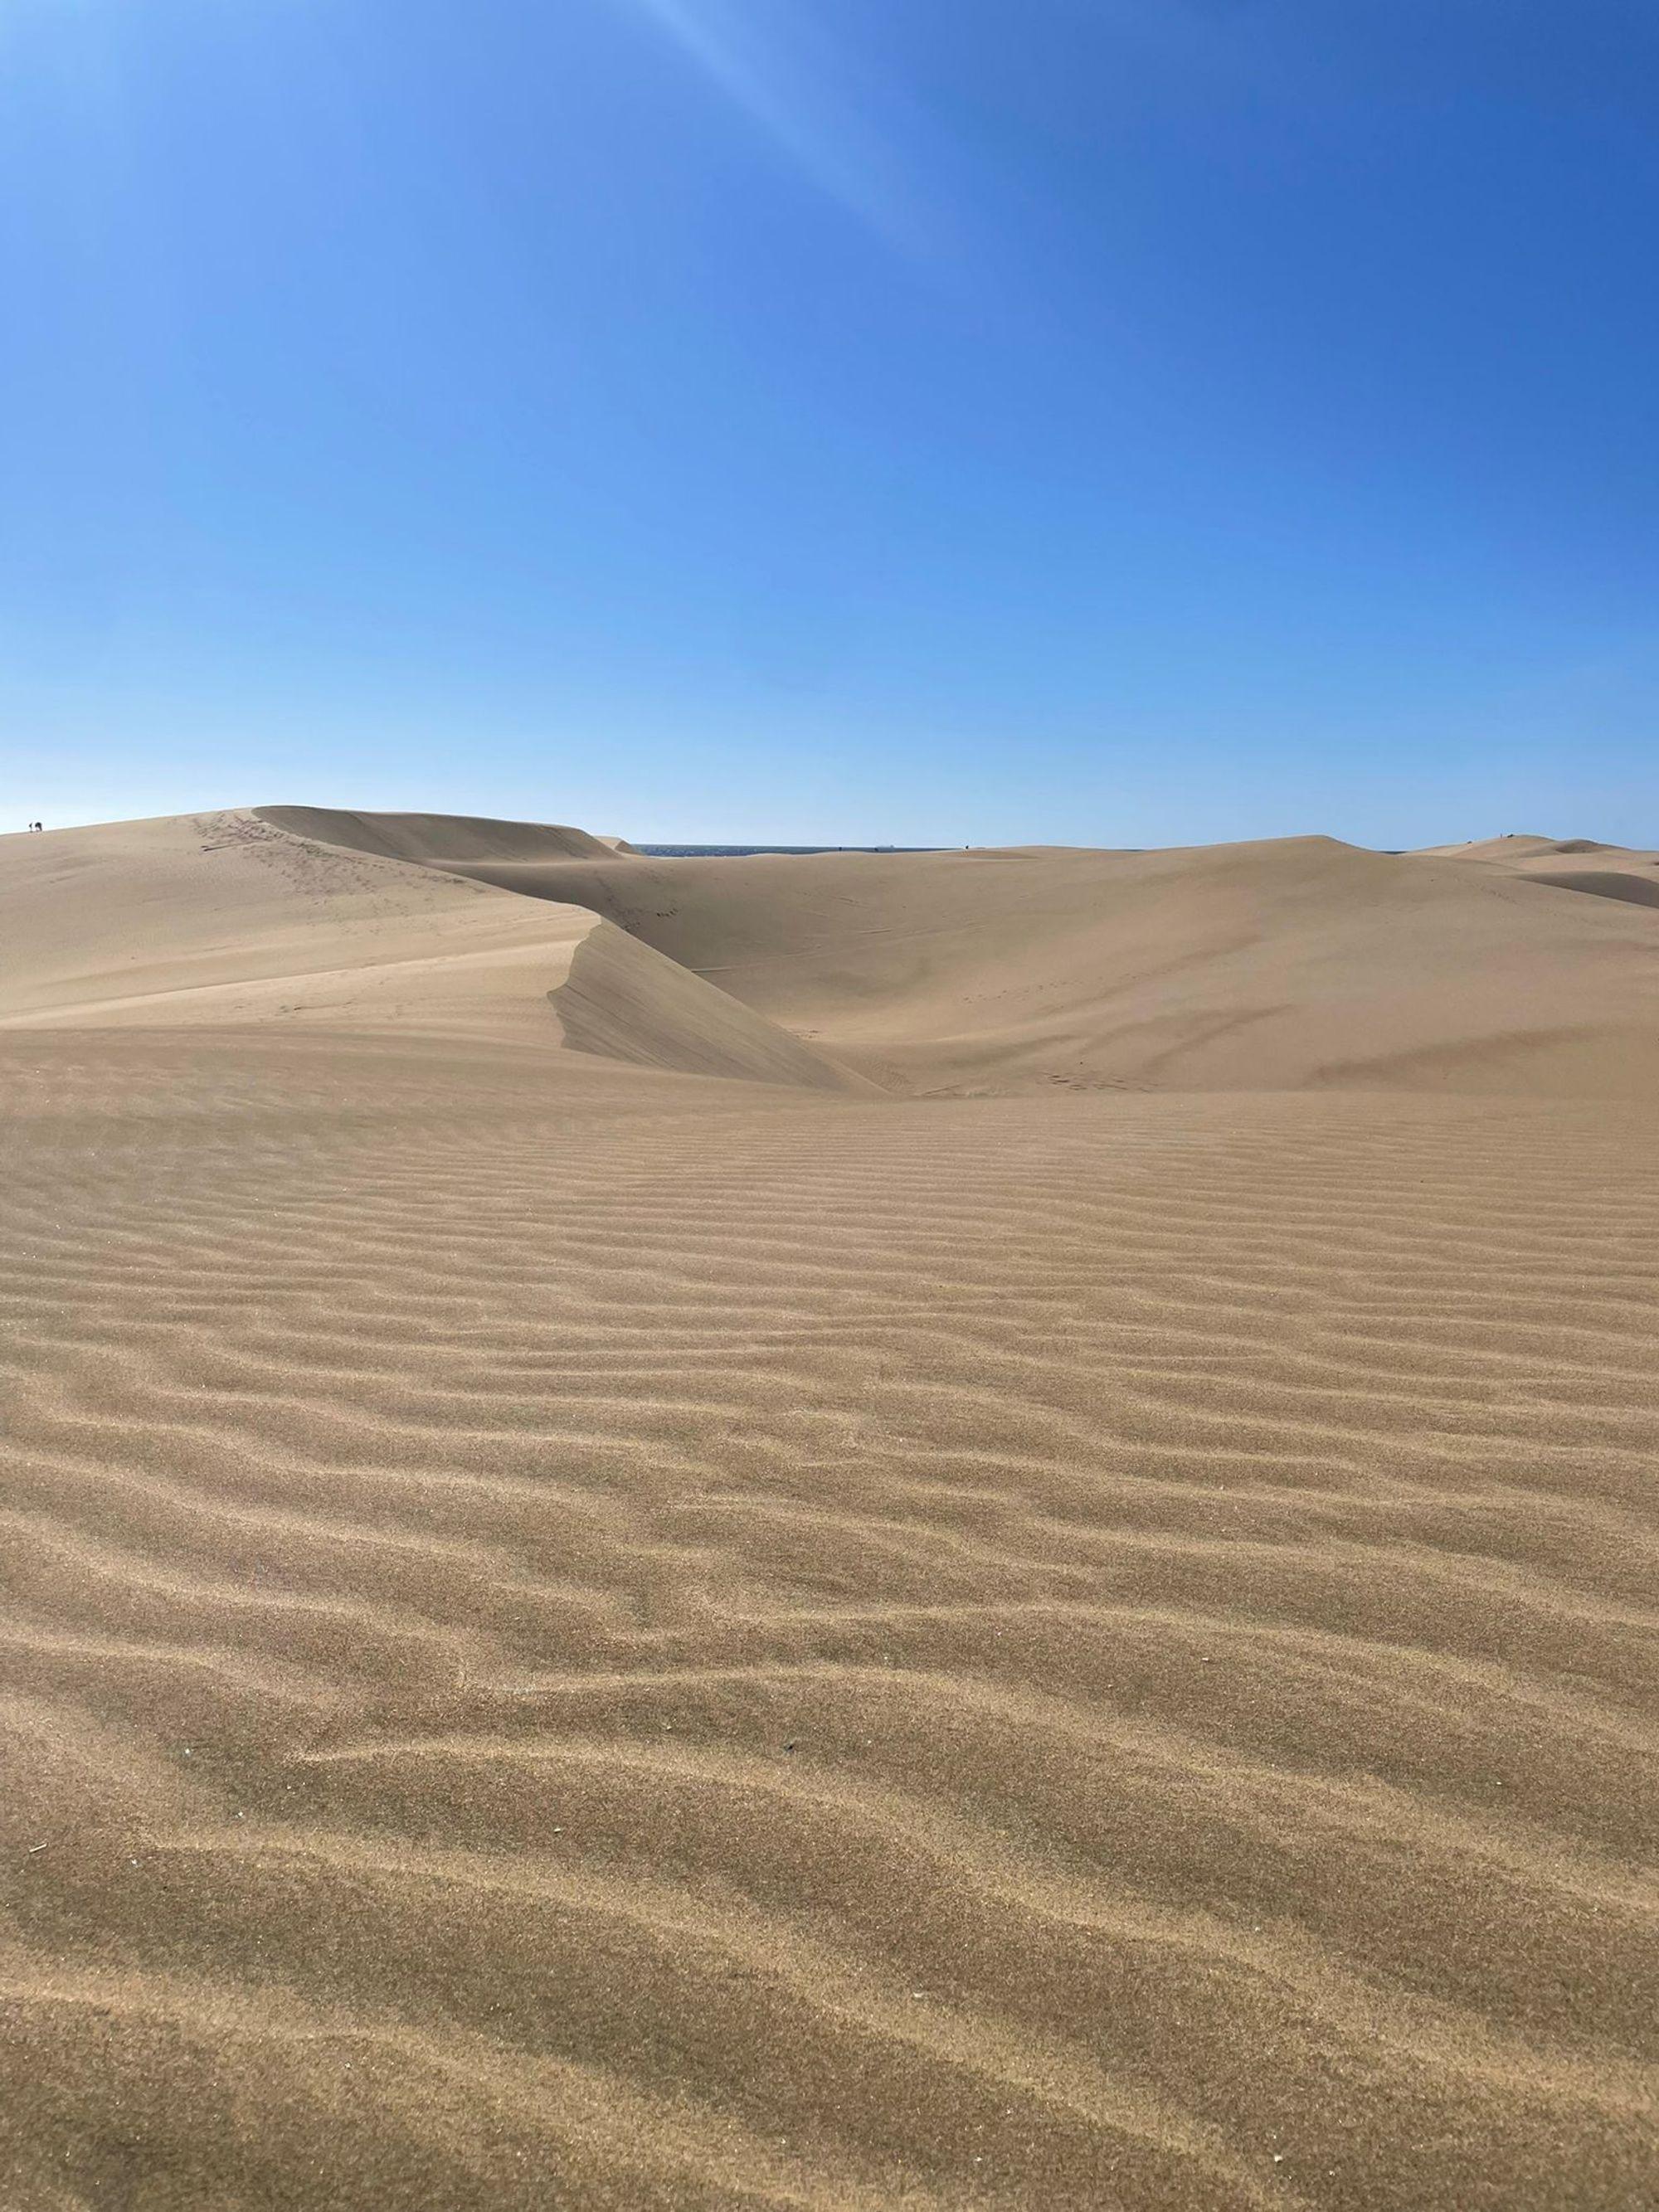 Maspalomas’ sand dunes in the South of Gran Canaria Island